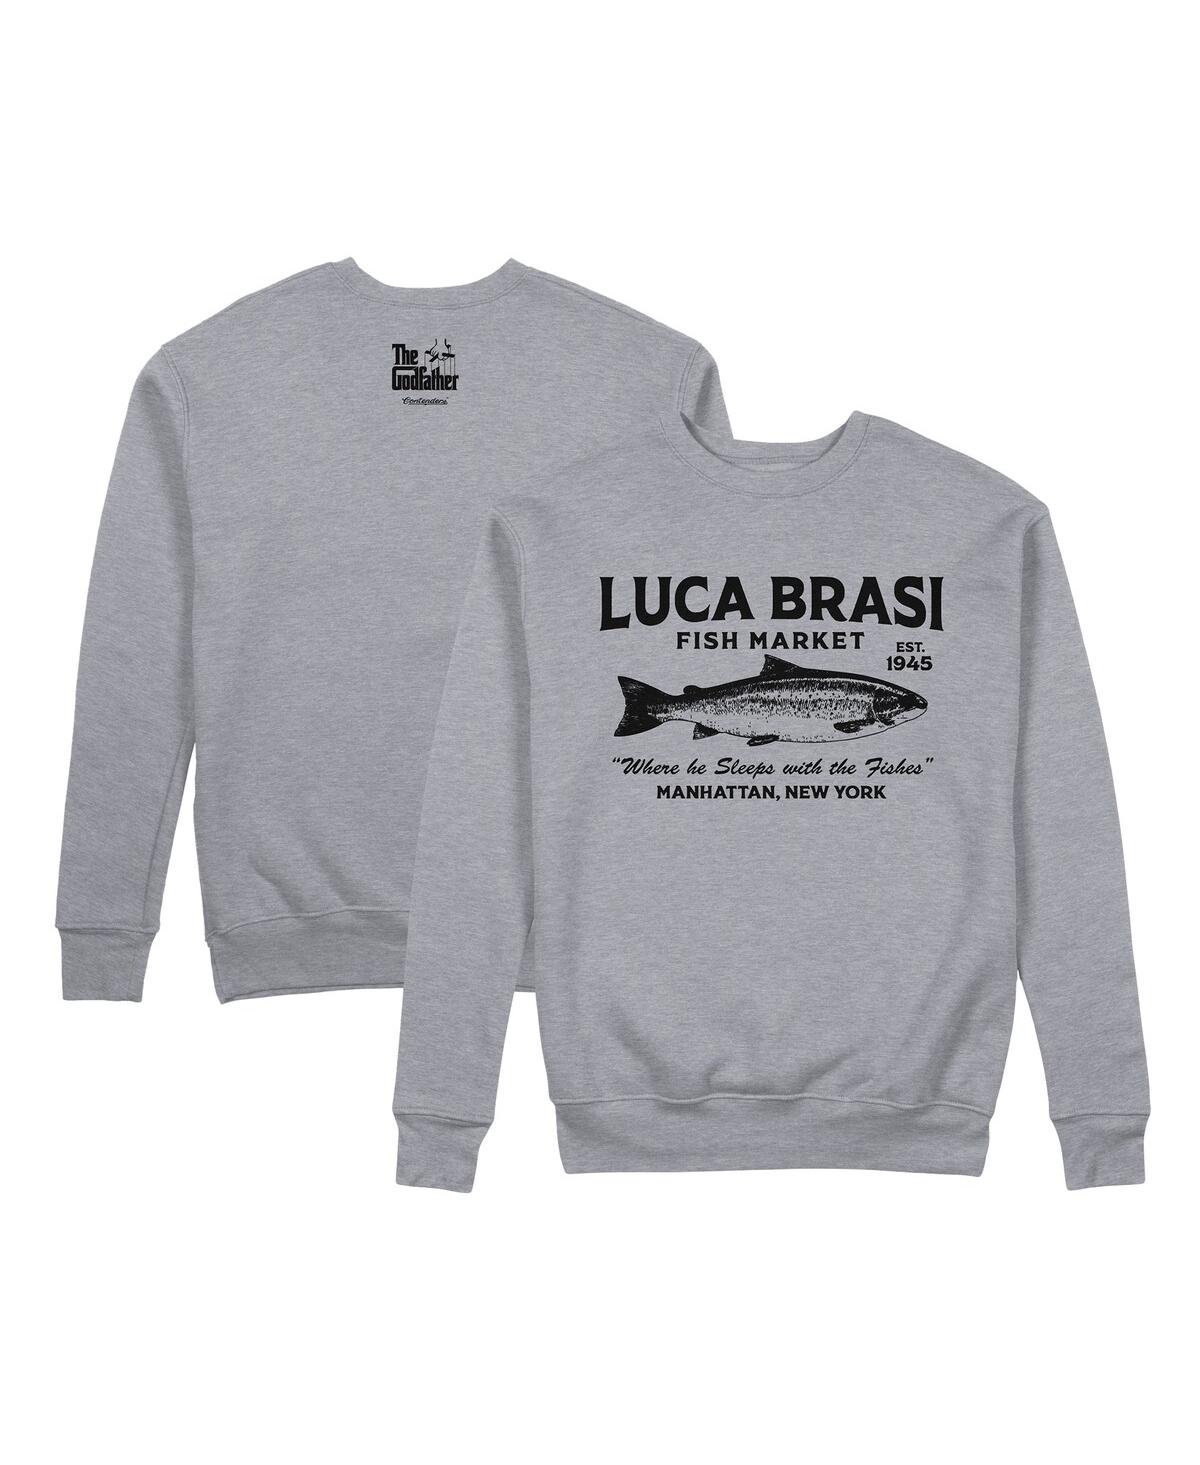 Contenders Clothing Men's  Heather Gray The Godfather Luca Brasi Fish Market Pullover Sweatshirt